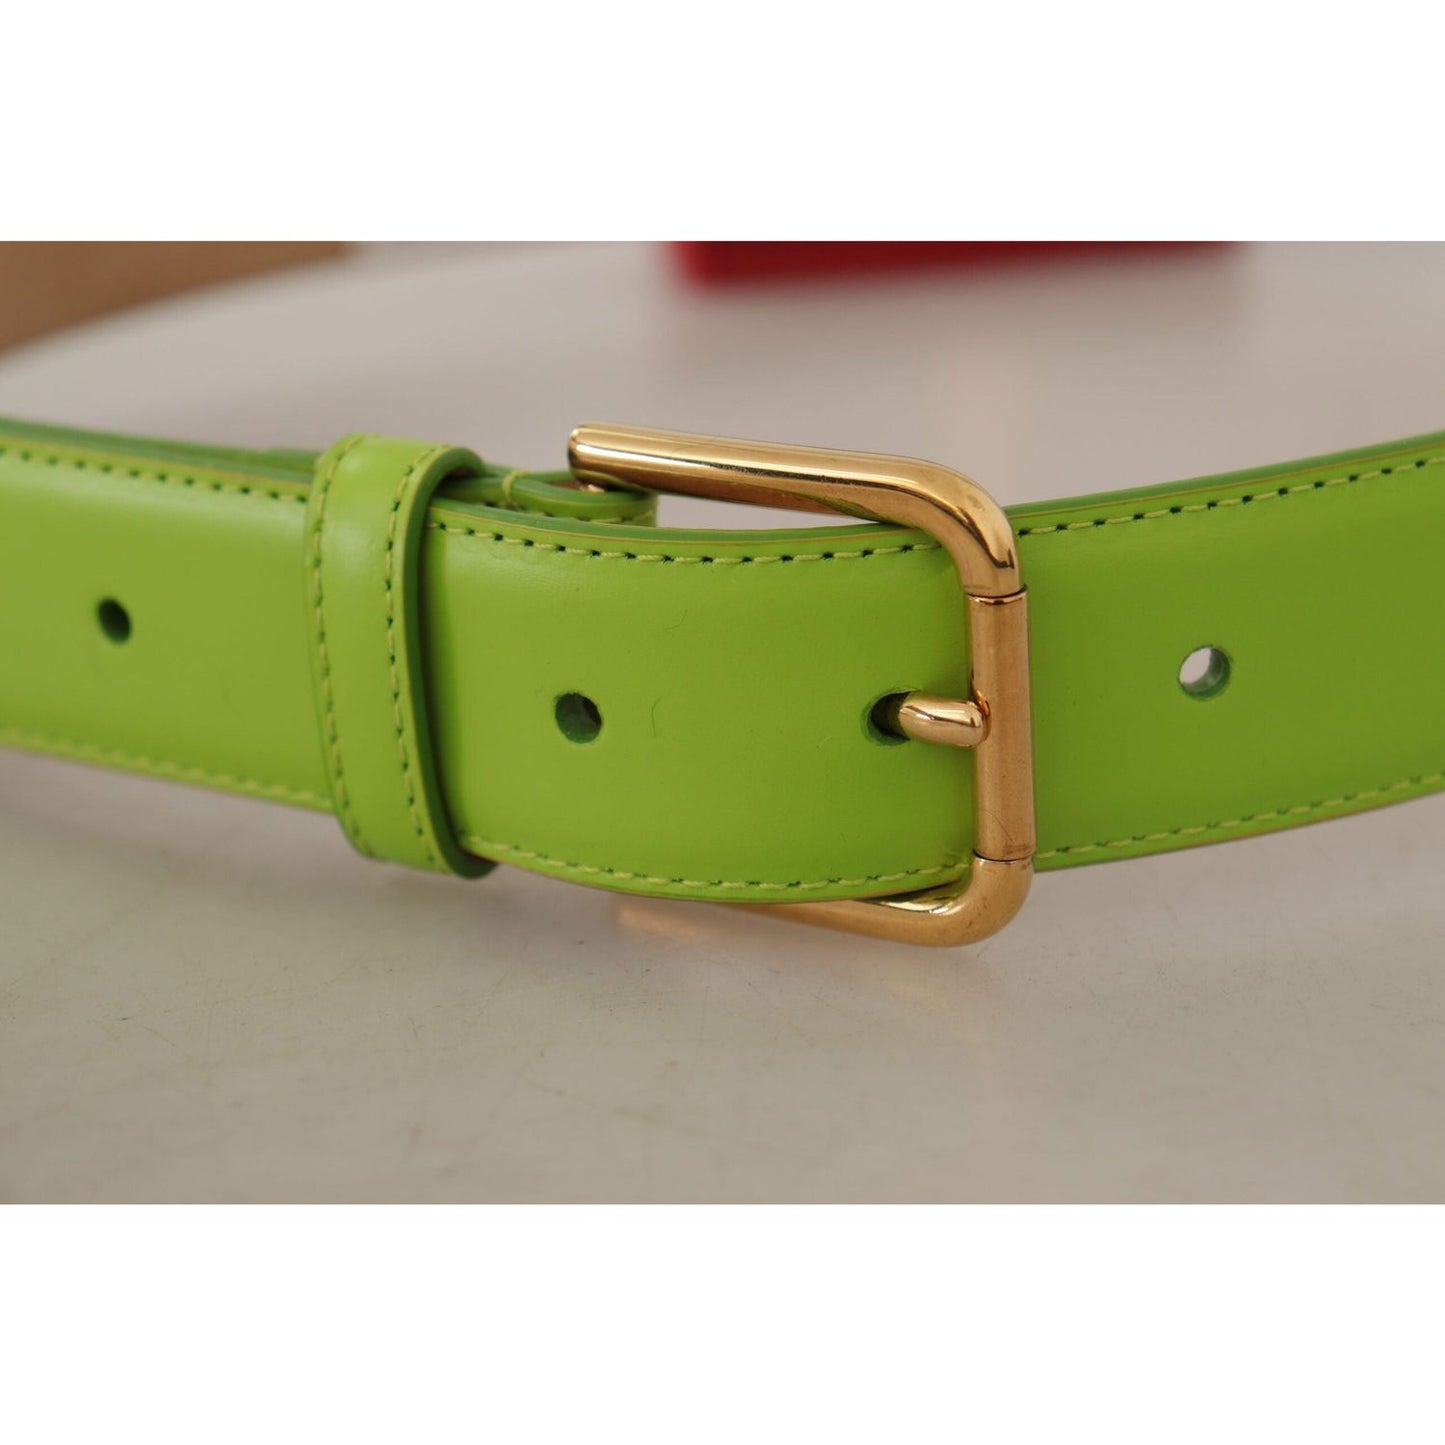 Dolce & Gabbana Elegant Leather Belt with Mini Bag Accessory green-leather-devotion-heart-micro-bag-headphones-belt IMG_9067-scaled-821bb6c1-3be.jpg